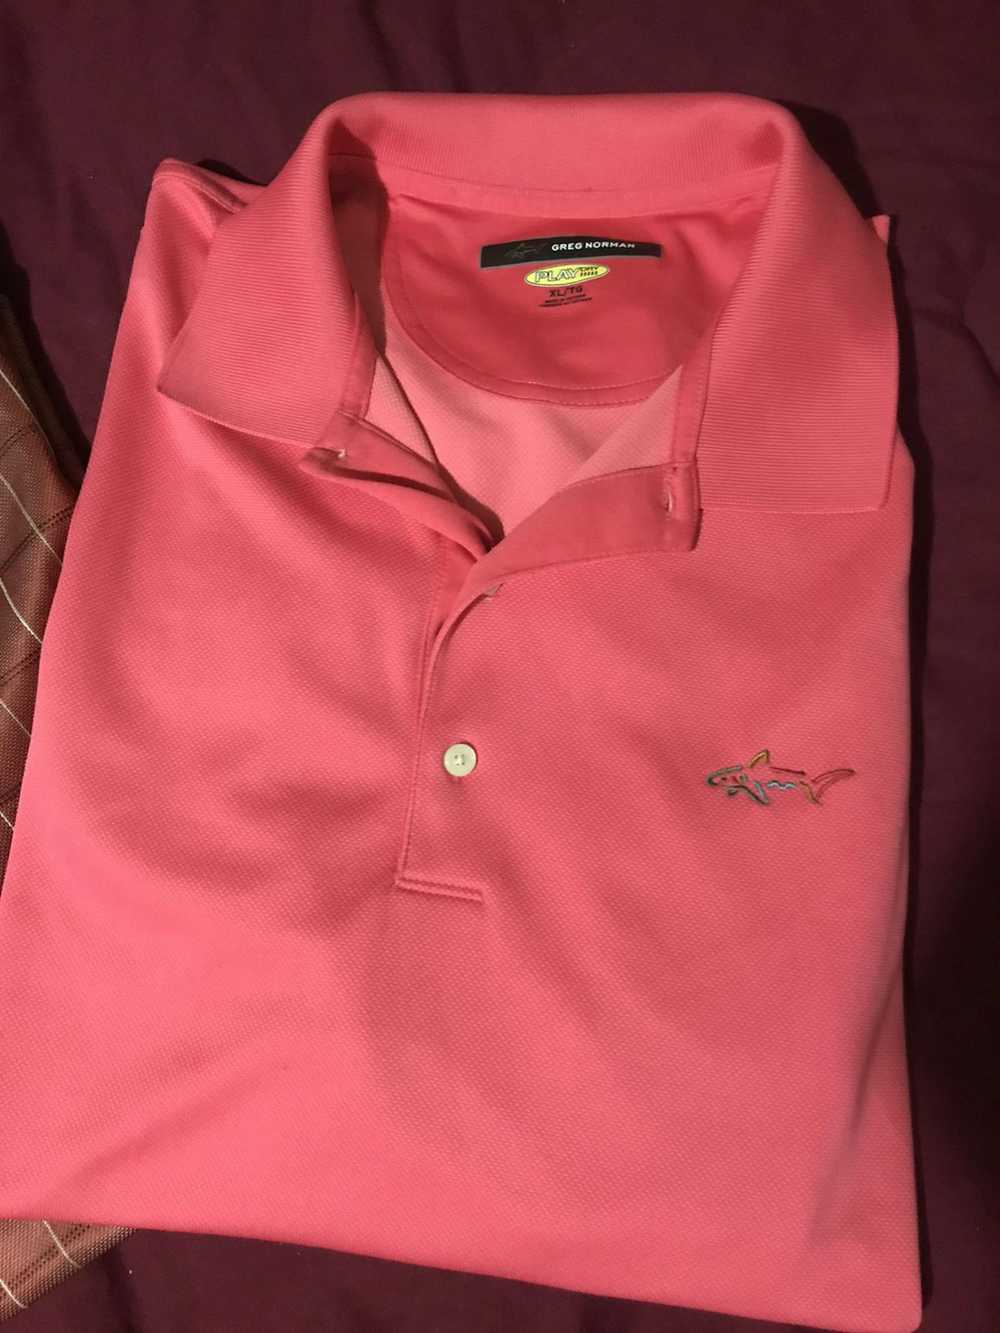 Greg Norman 2 Greg Norman Golf Shirts XL - image 2